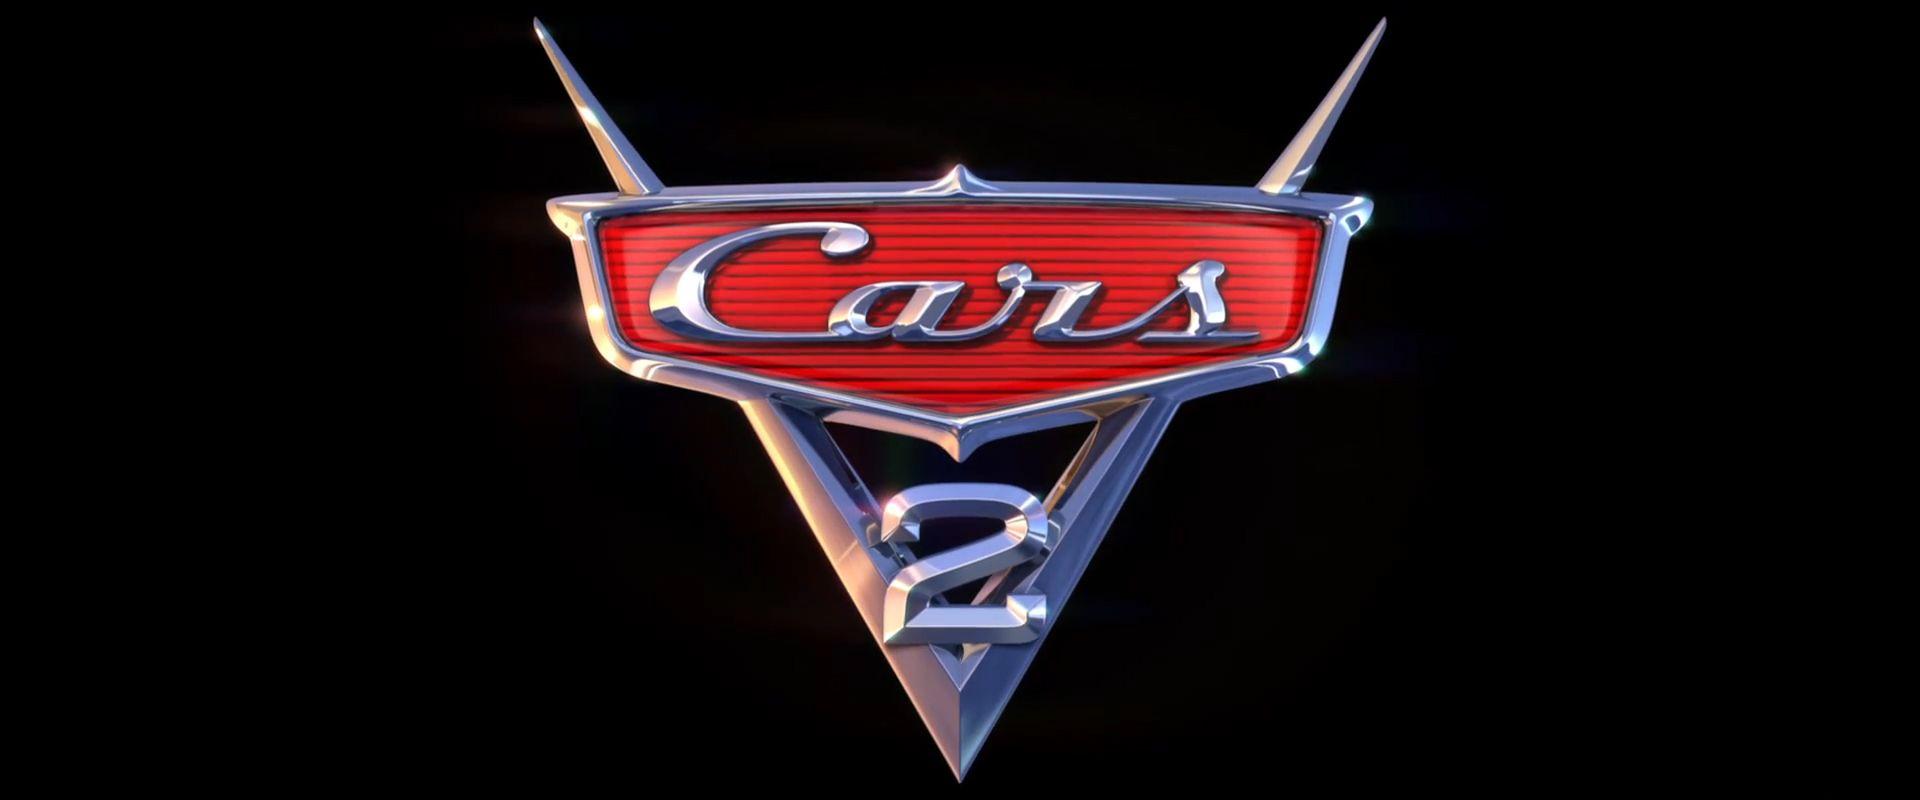 Cars 4 Logo - Image - 51 cars 2.jpg | Logopedia | FANDOM powered by Wikia